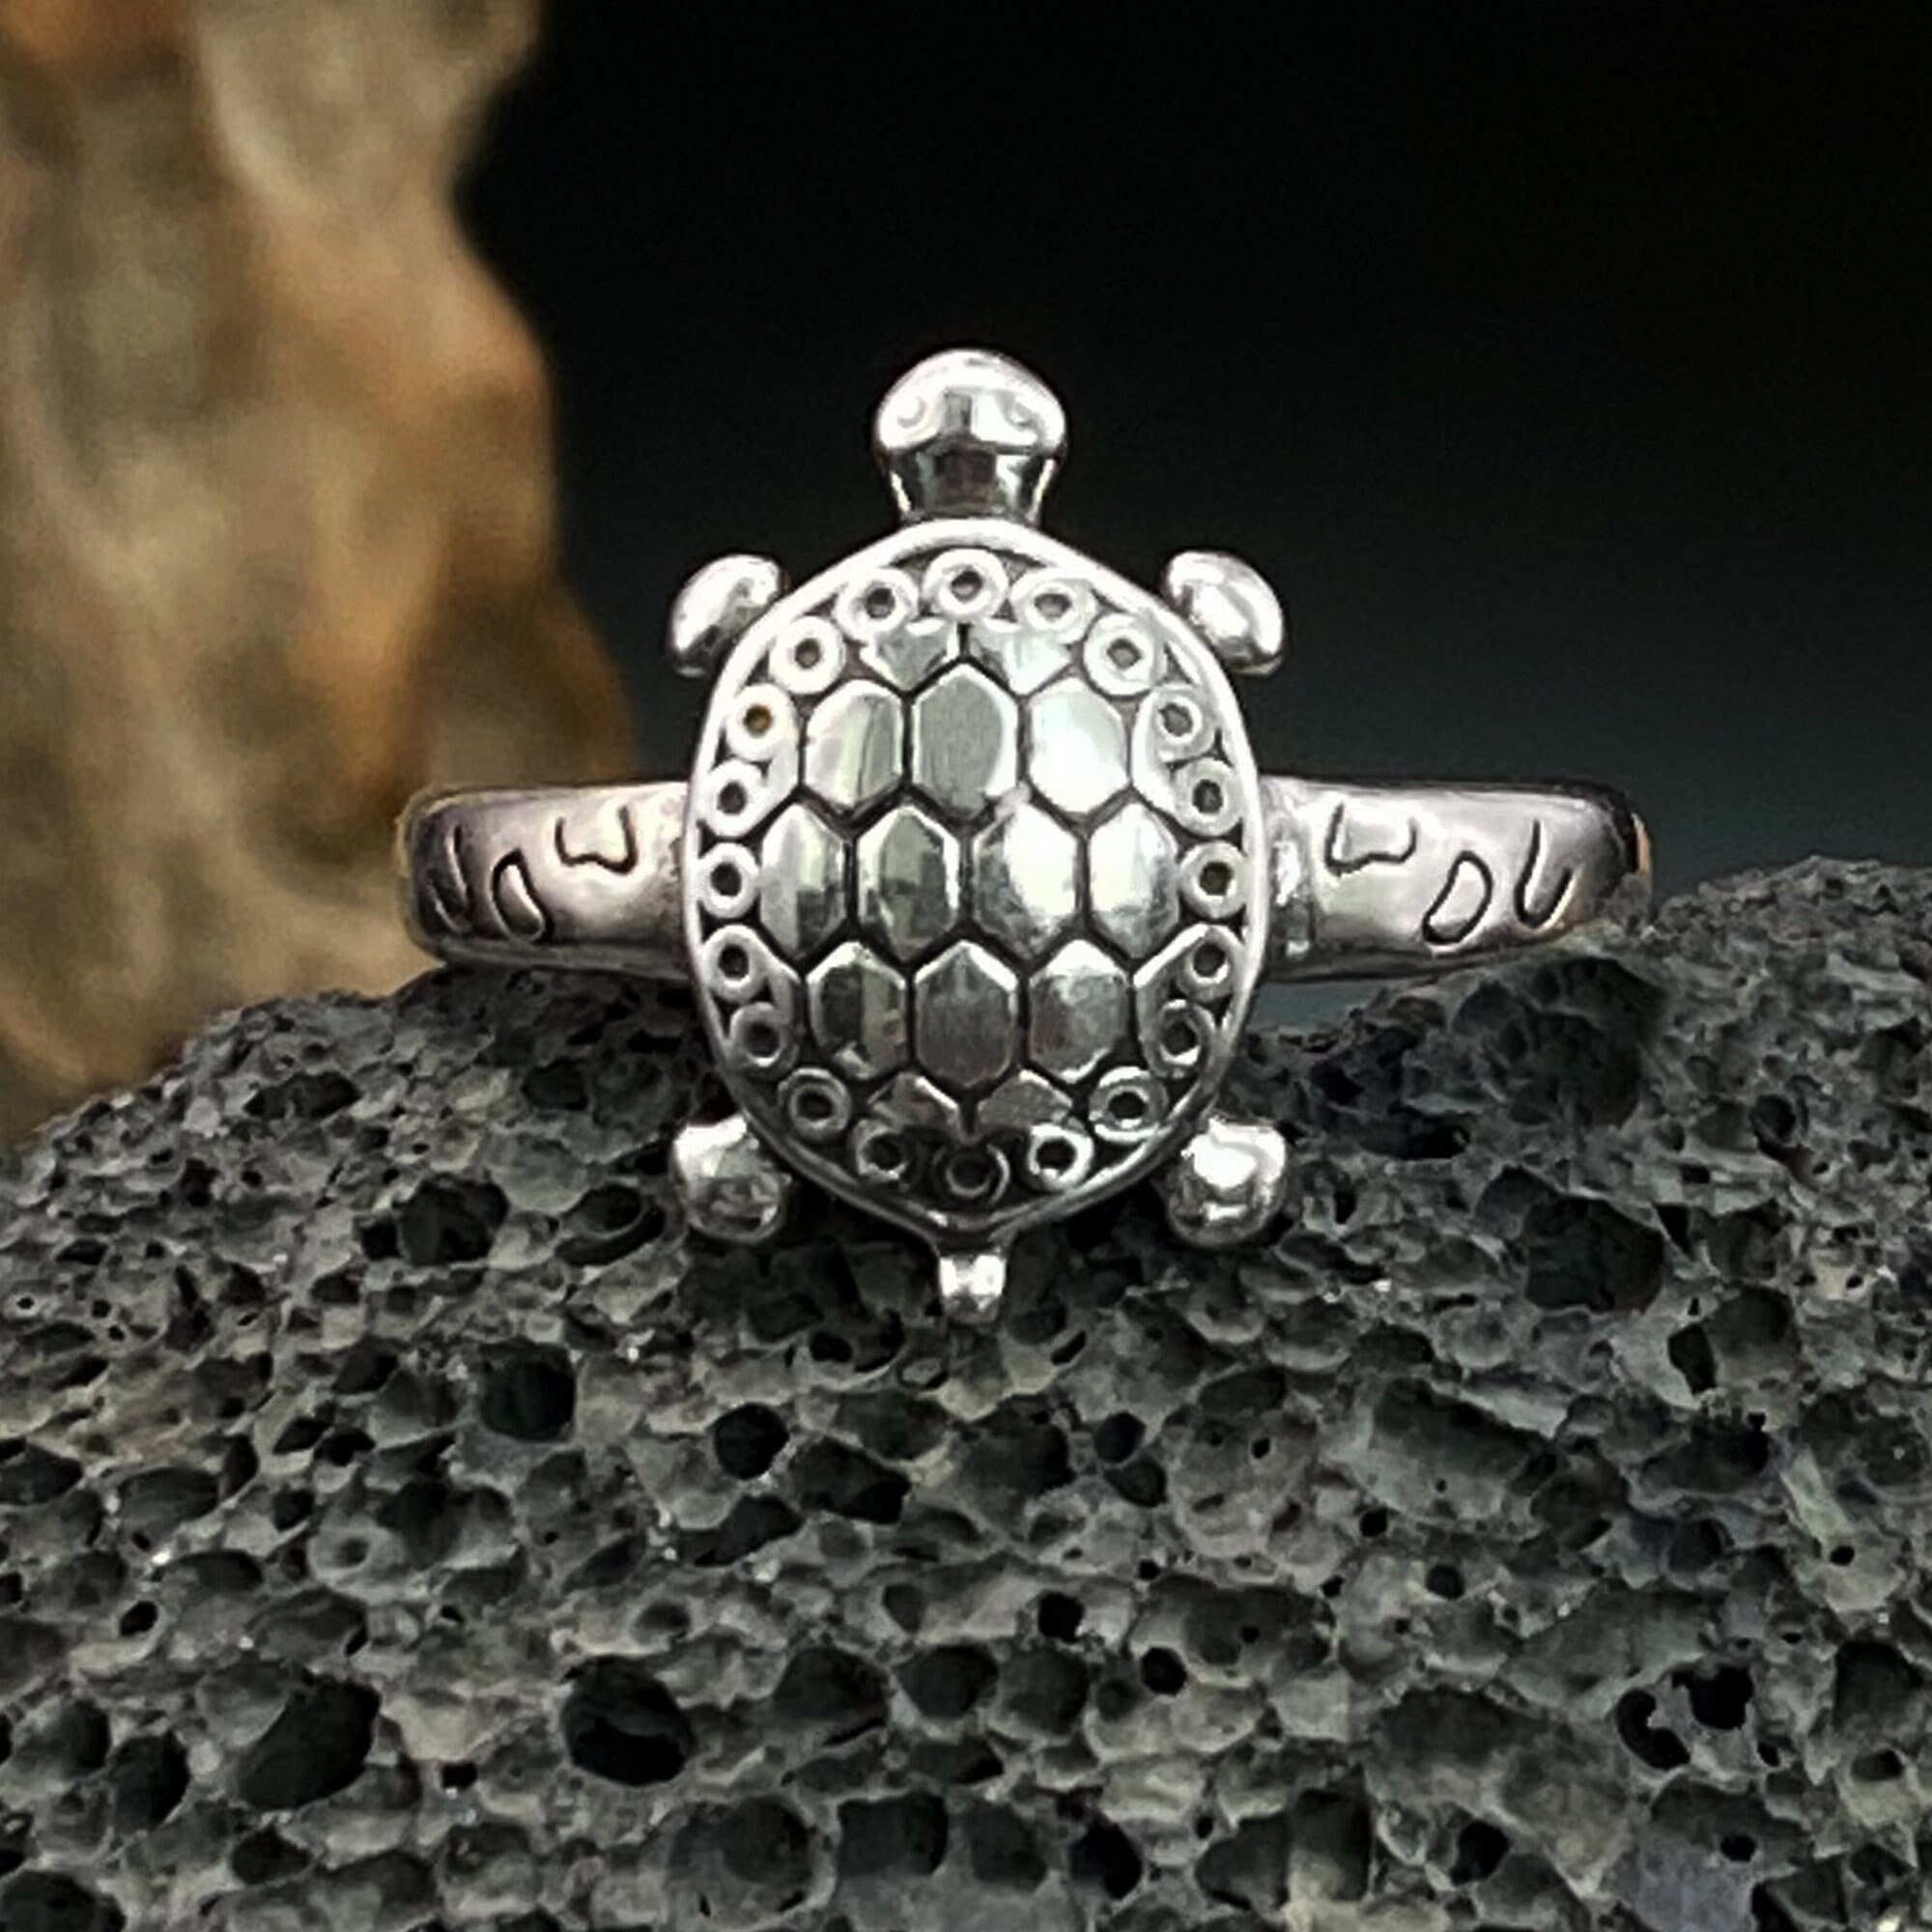 Buy Sogo Teleshoping Tortoise Meru Ring for Men and Women at Amazon.in